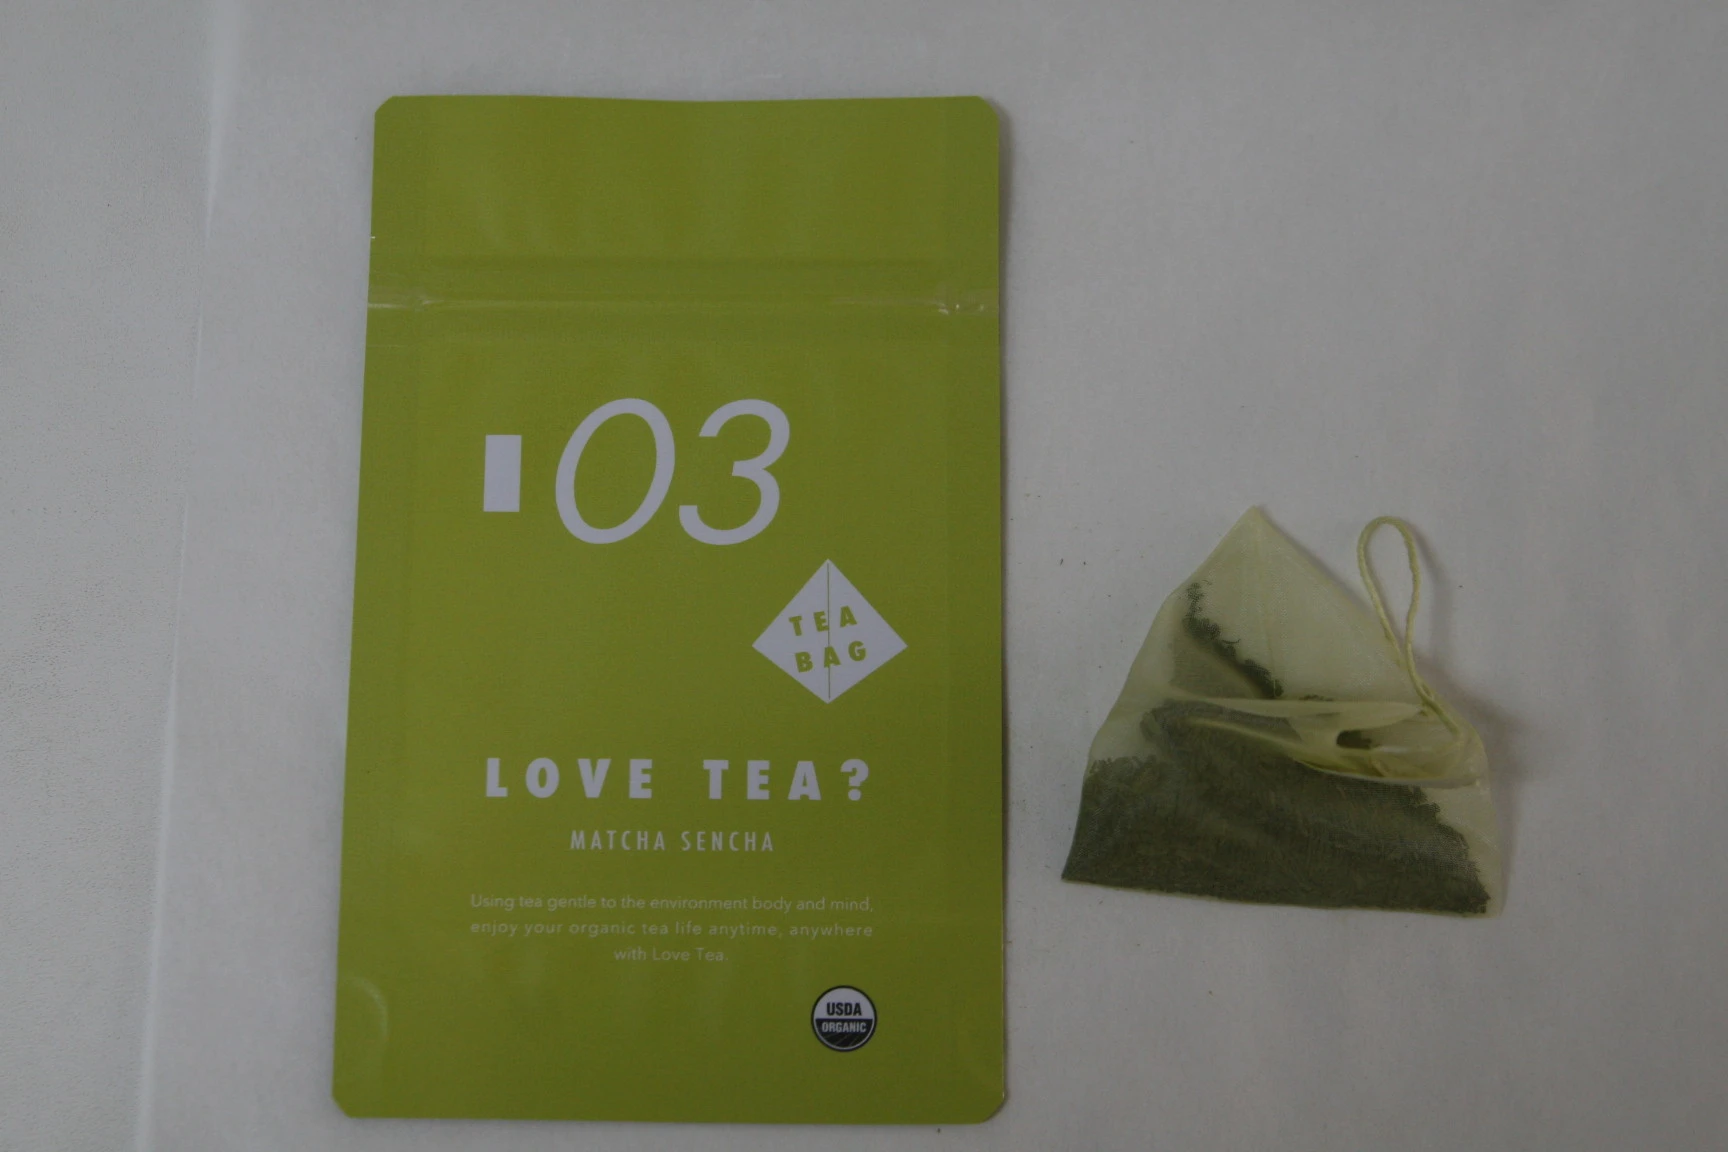 Fragrant sencha stress relief green tea bag private label organic